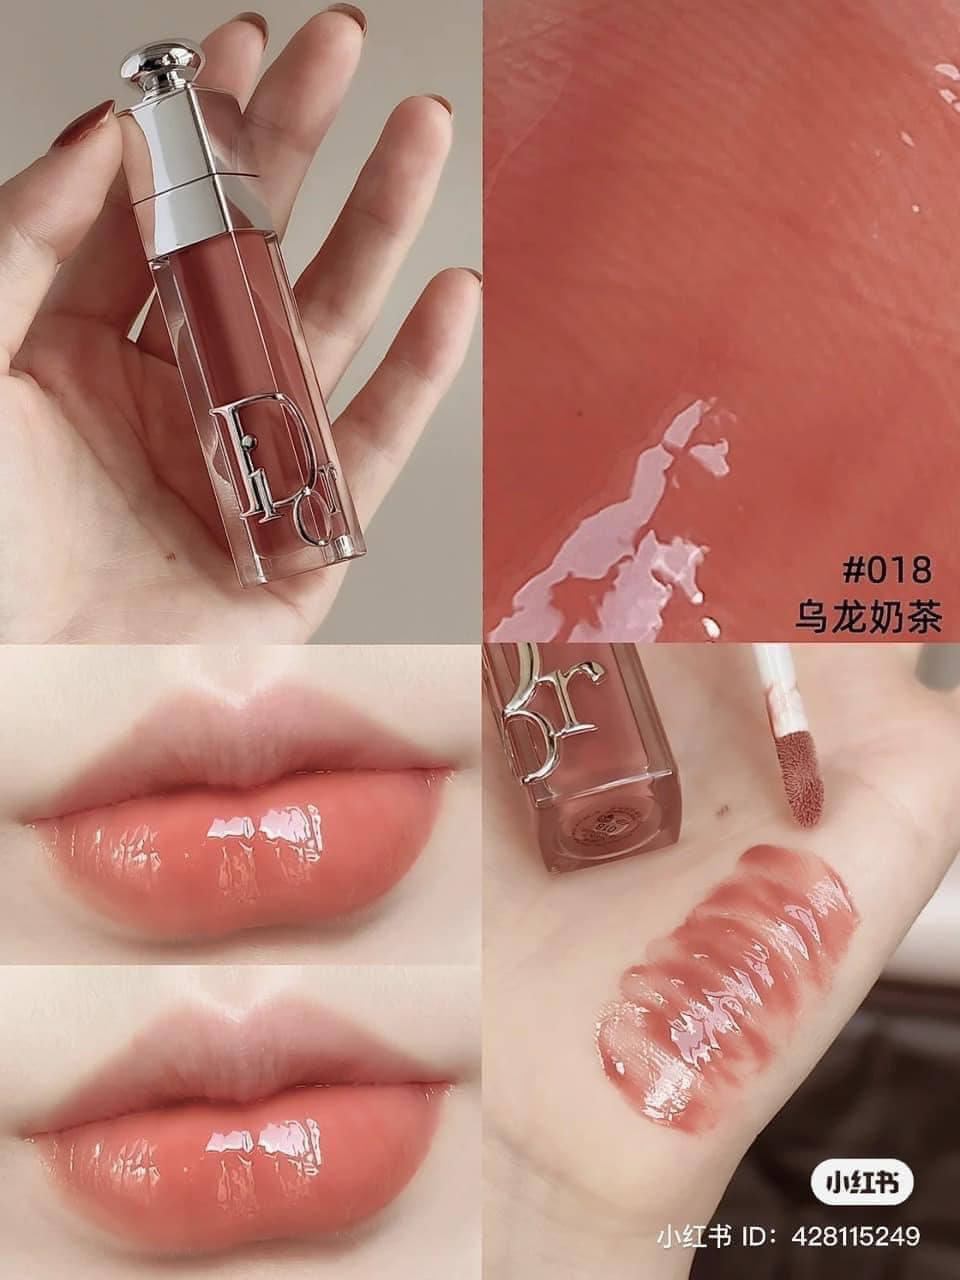 Son Dưỡng Dior Collagen Addict Lip Maximizer 012 Rosewood  Màu Hồng Cam   KYOVN